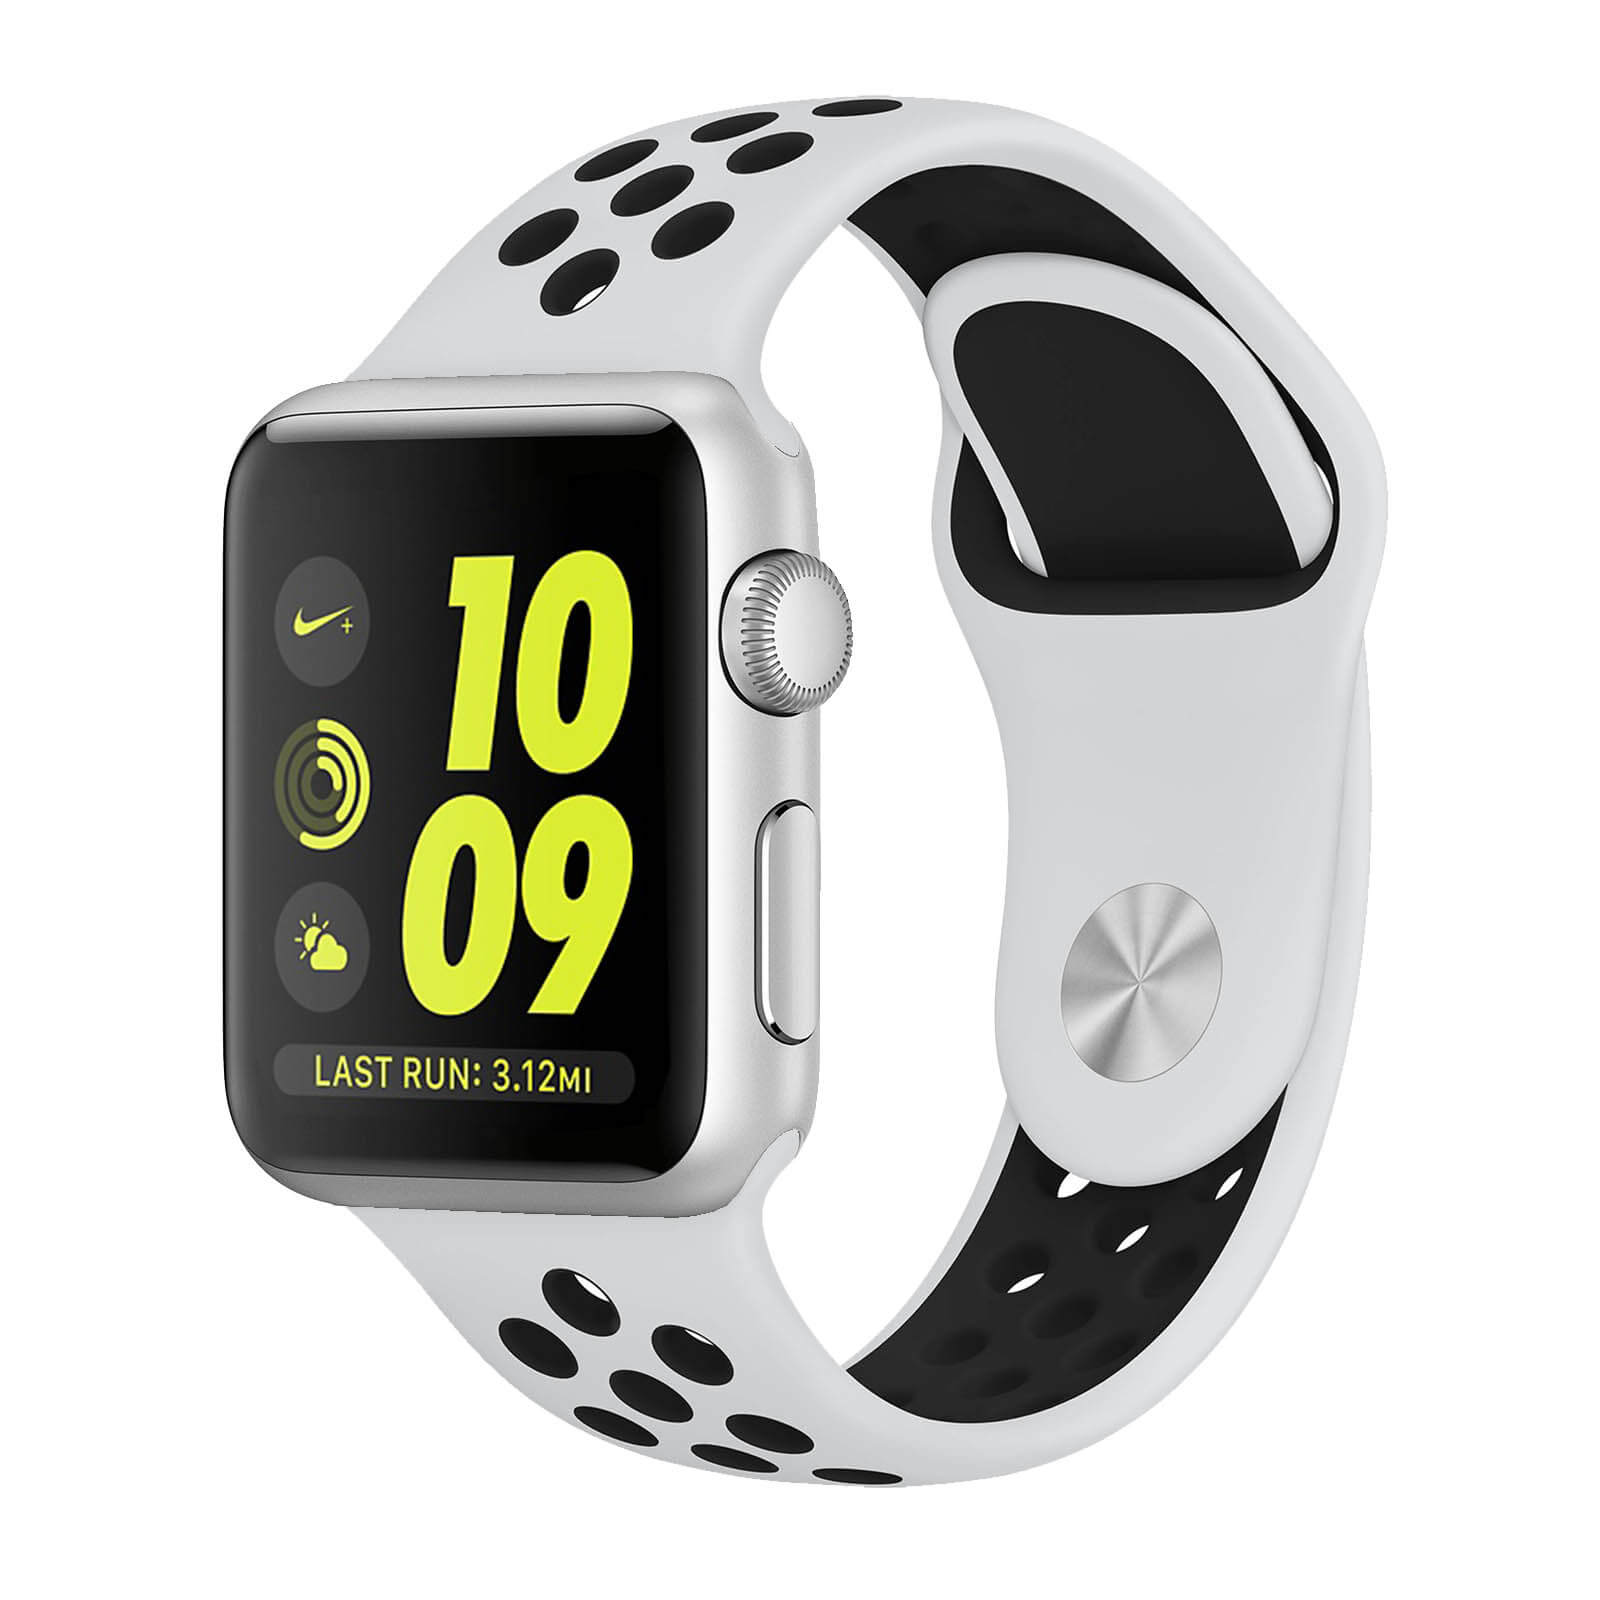 Apple Watch Series 3 Nike+ 38mm GPS WiFi Silber